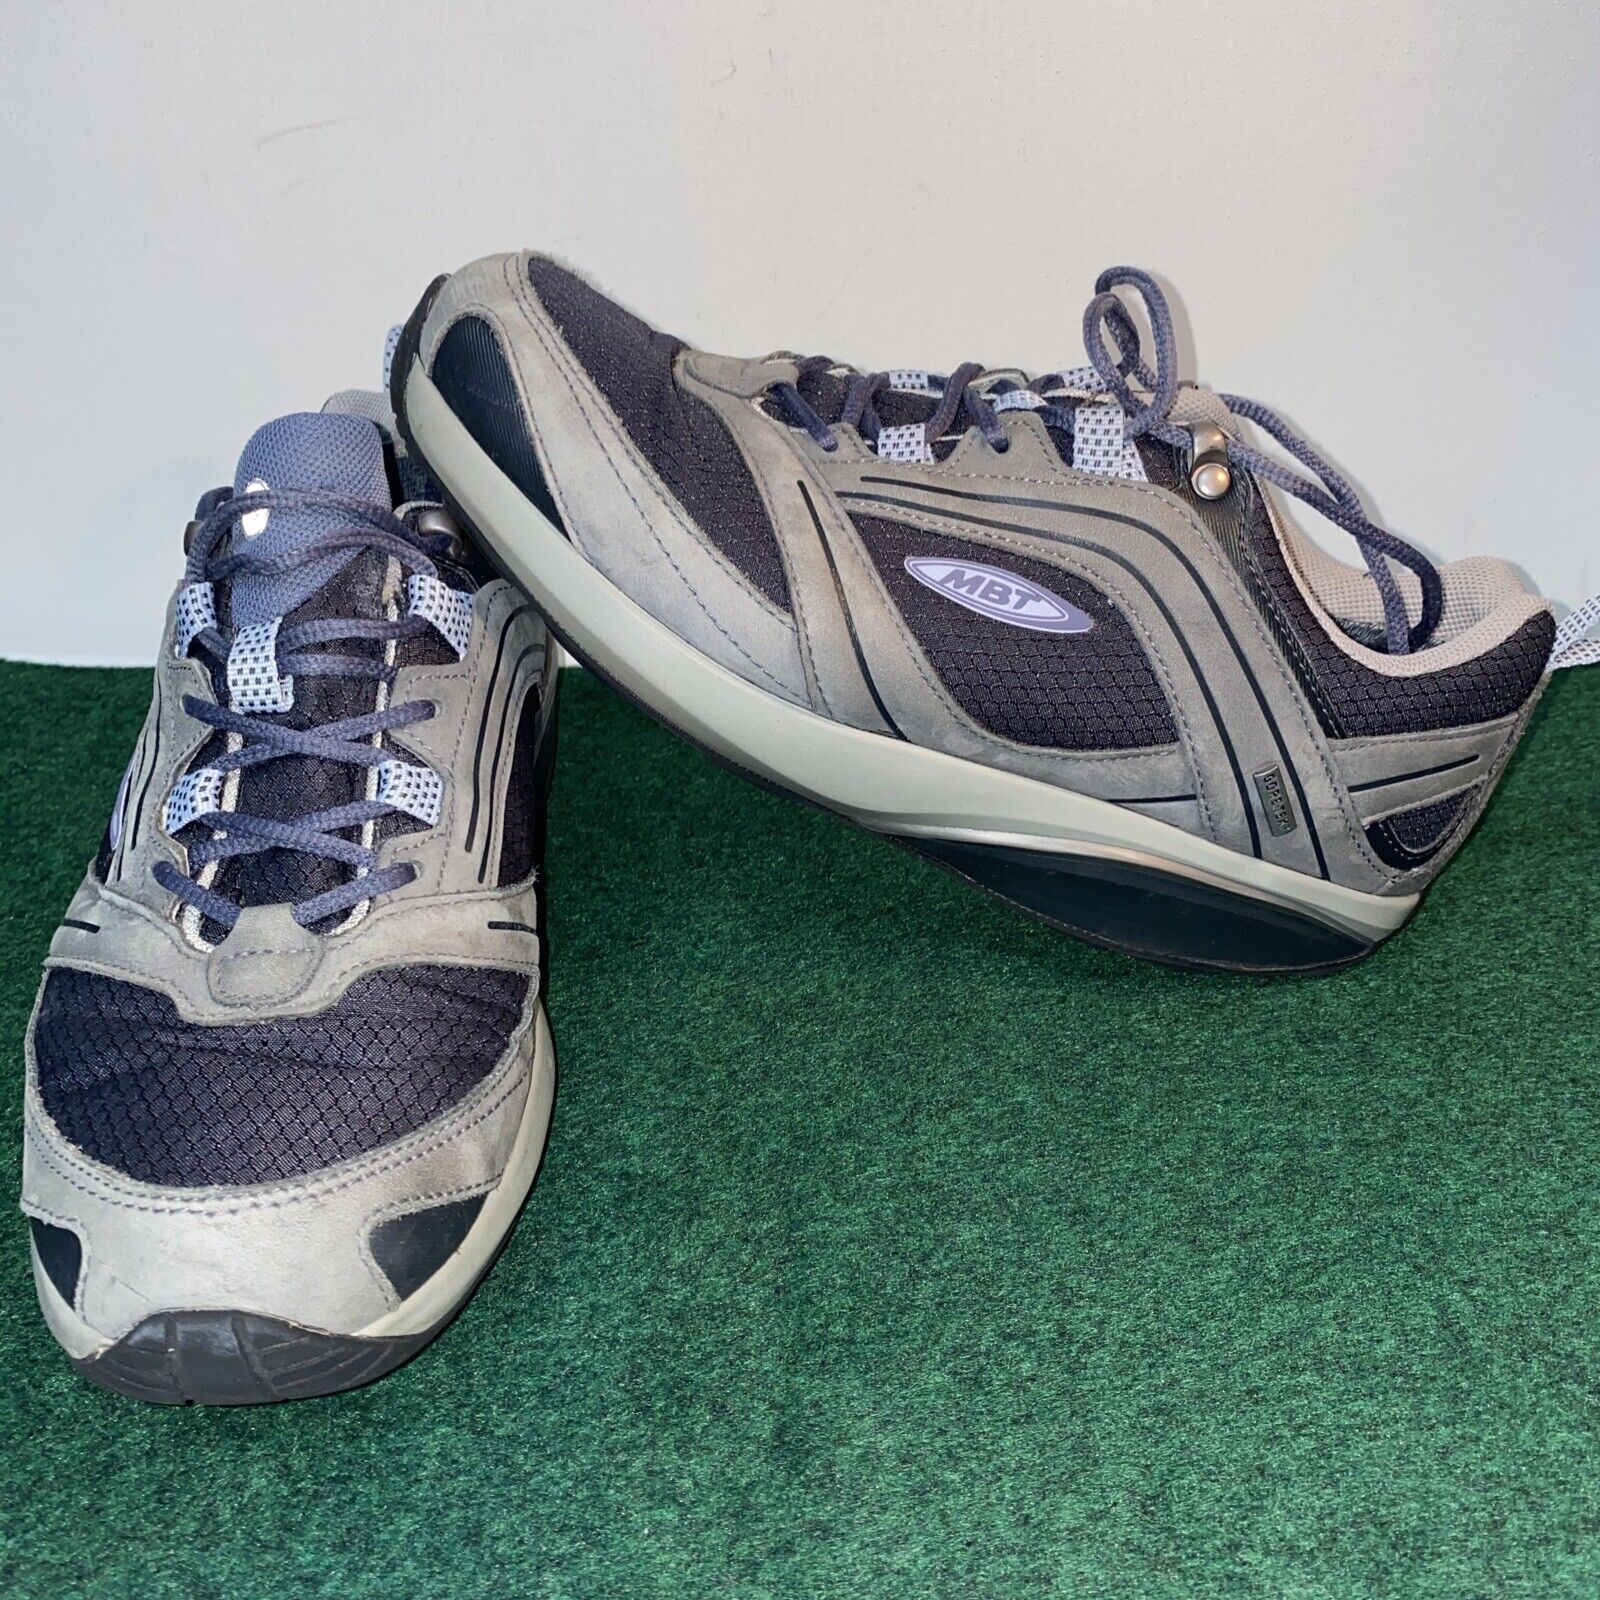 MBT WOMEN'S Blue Goretex Shaping Walking Sneakers Size 9-9.5 US EUC | eBay